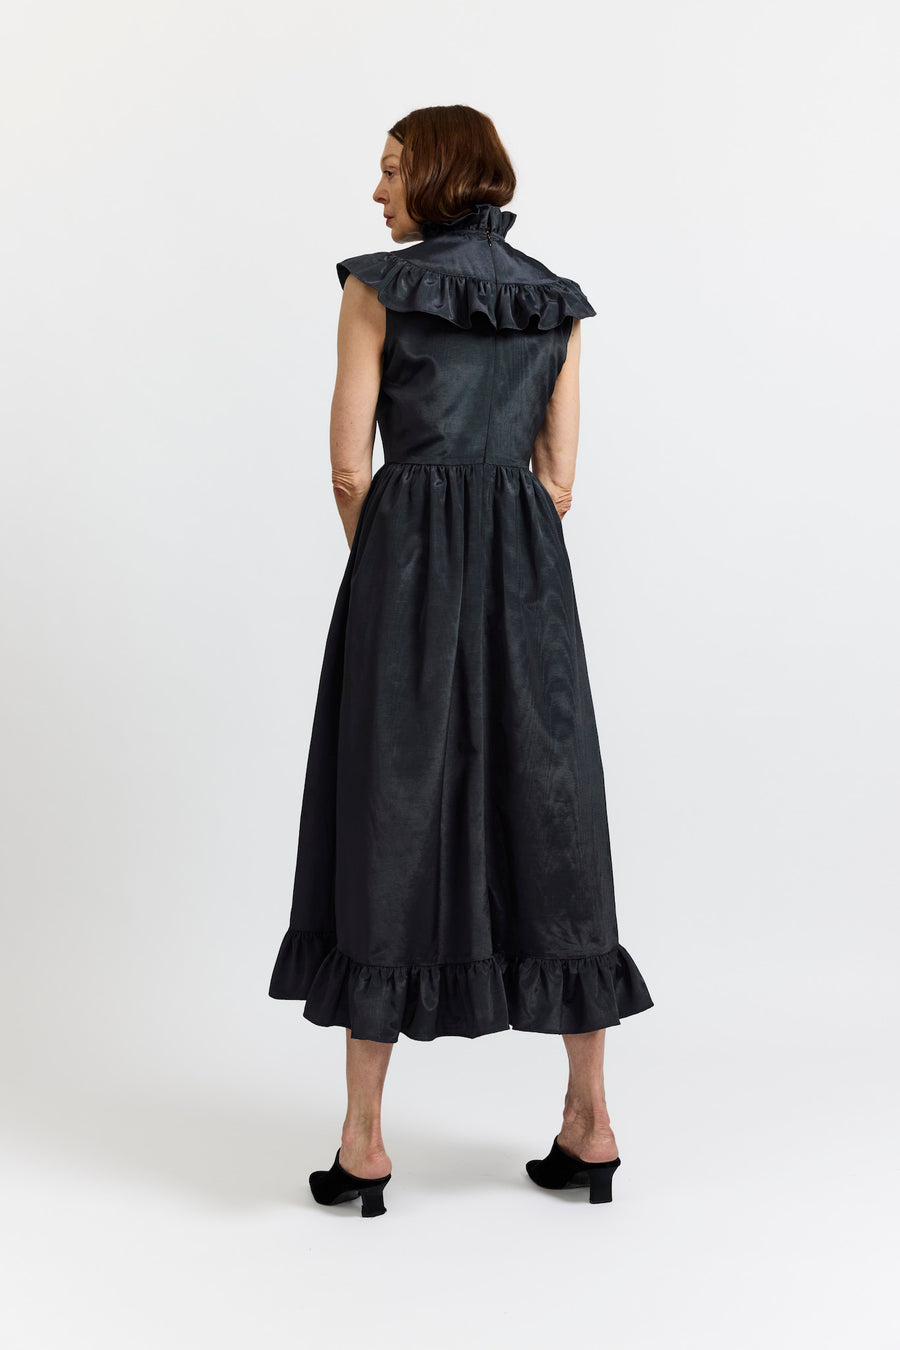 BATSHEVA - Caroline Dress in Black Moire